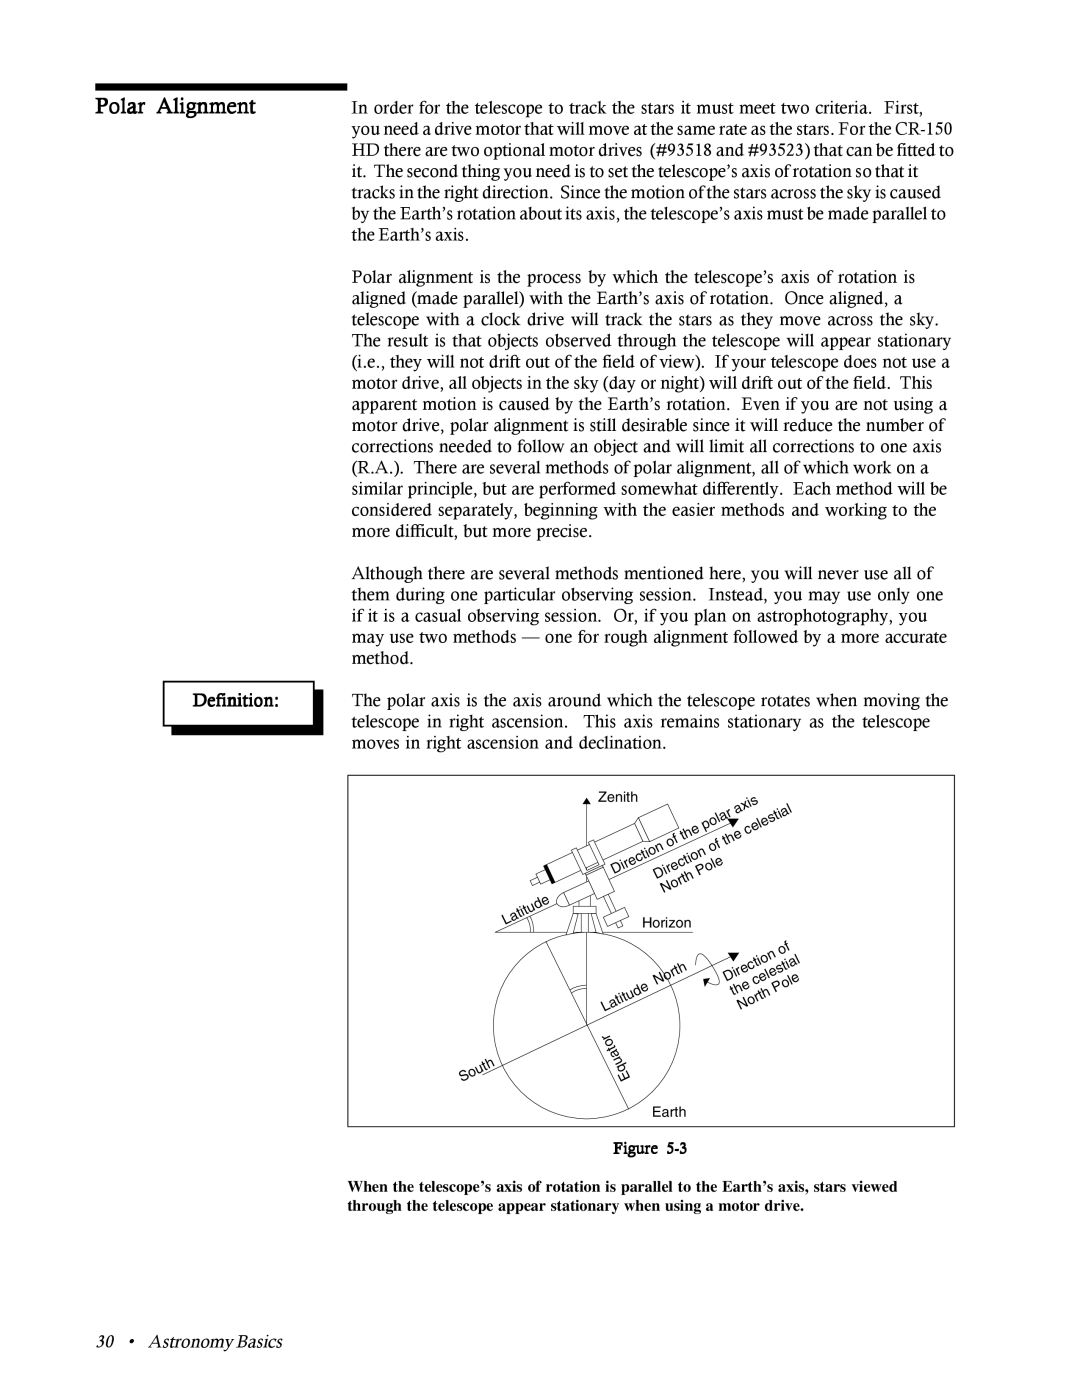 Celestron CR-150 HD instruction manual Polar Alignment, Equator, Definition, Astronomy Basics 